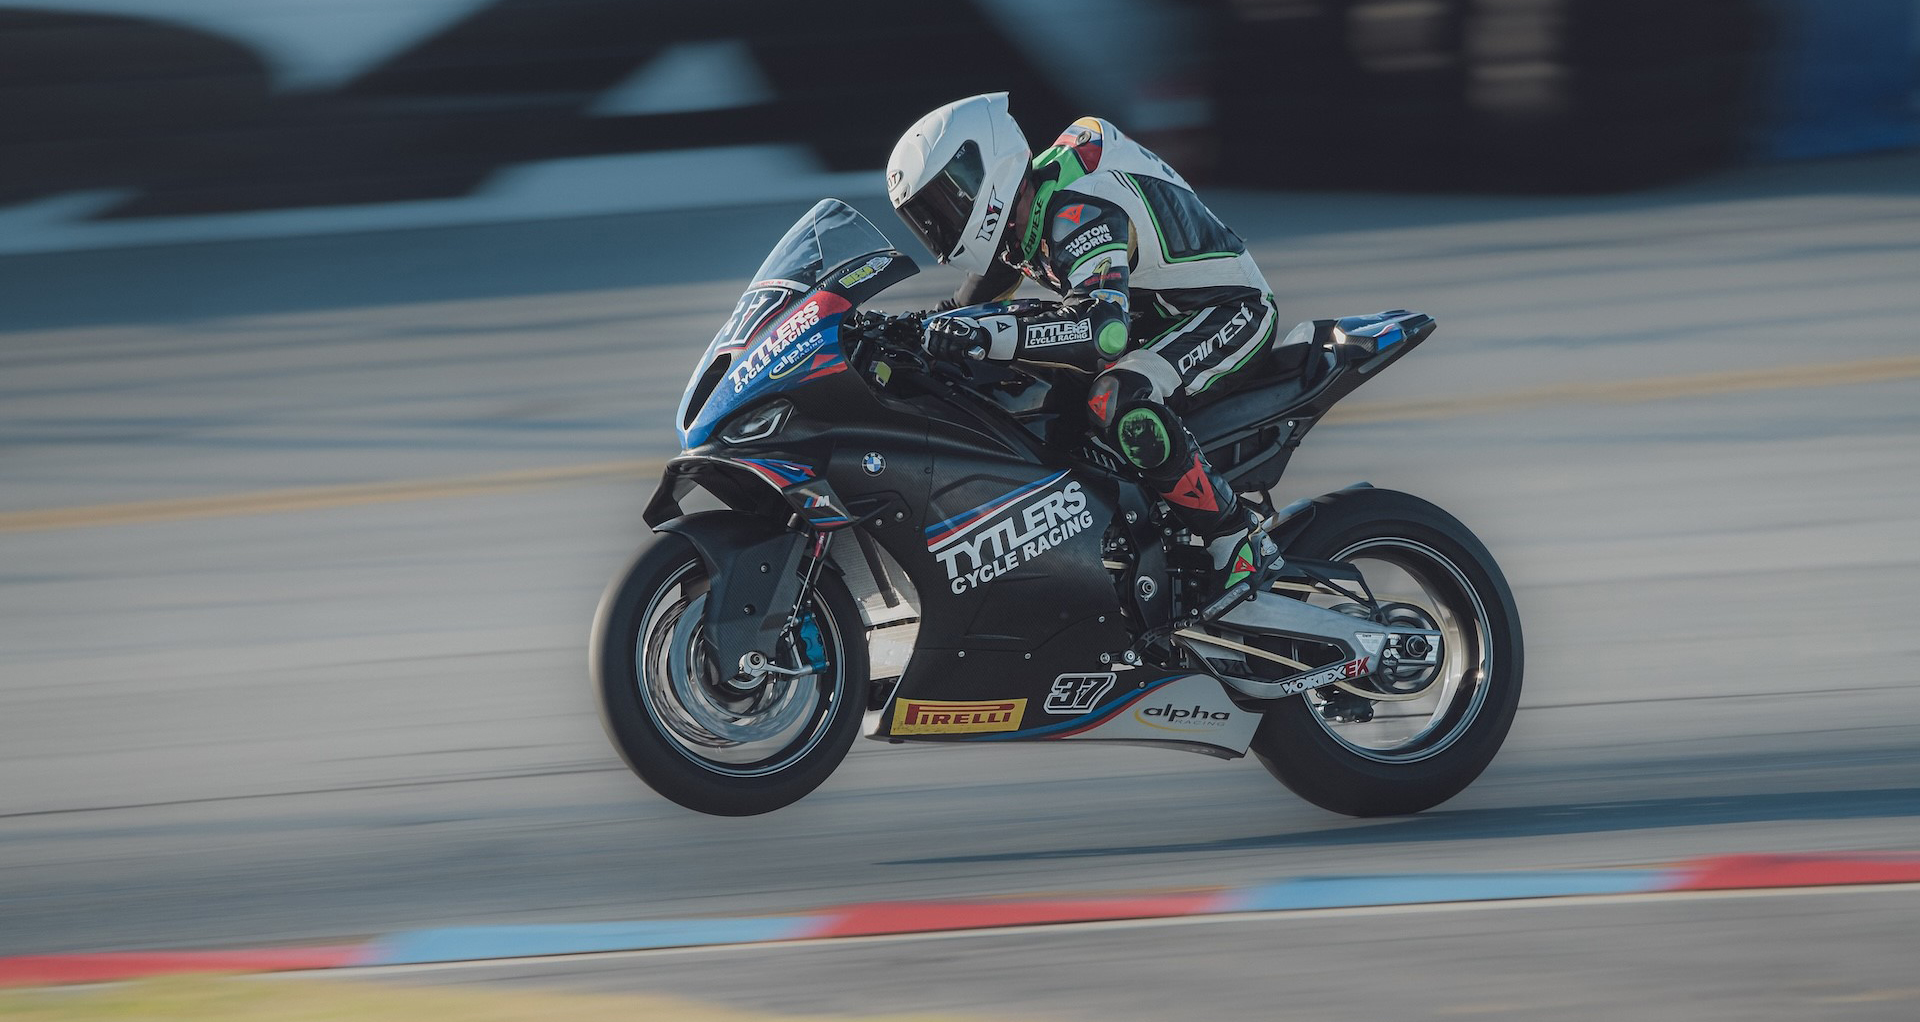 Stefano Messa sets Daytona motorcycle track record